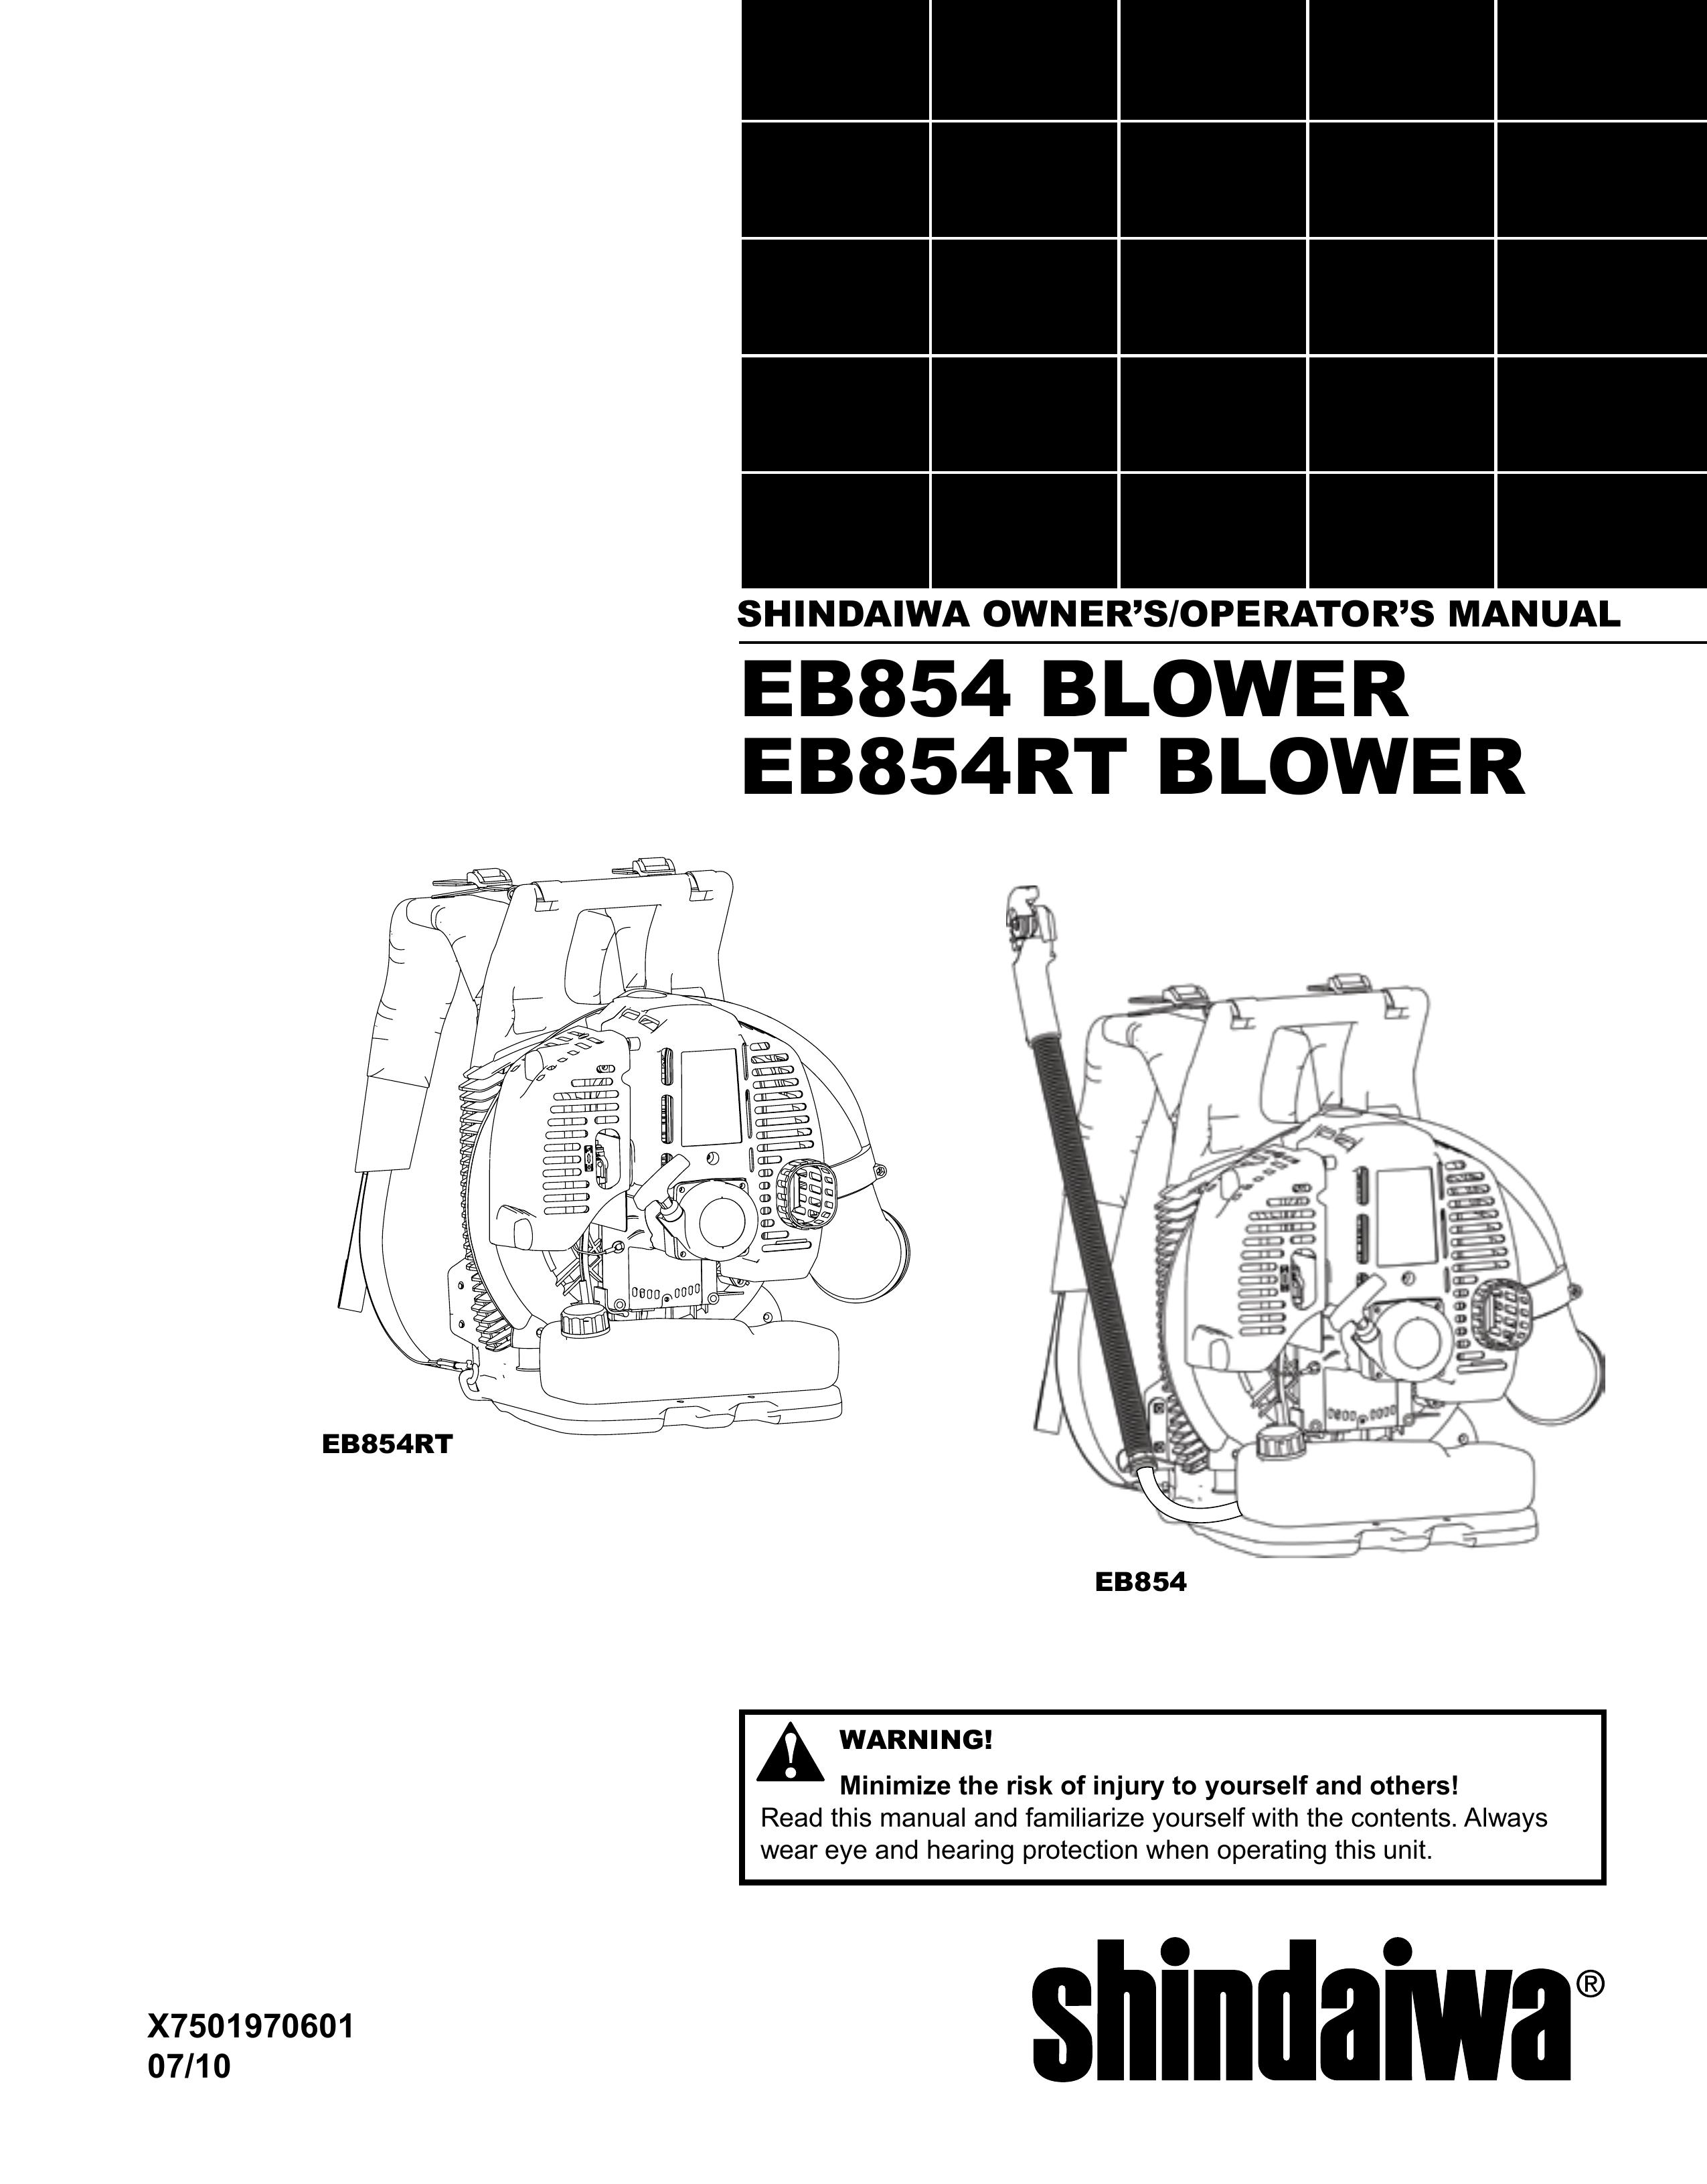 Shindaiwa EB854 Blower User Manual